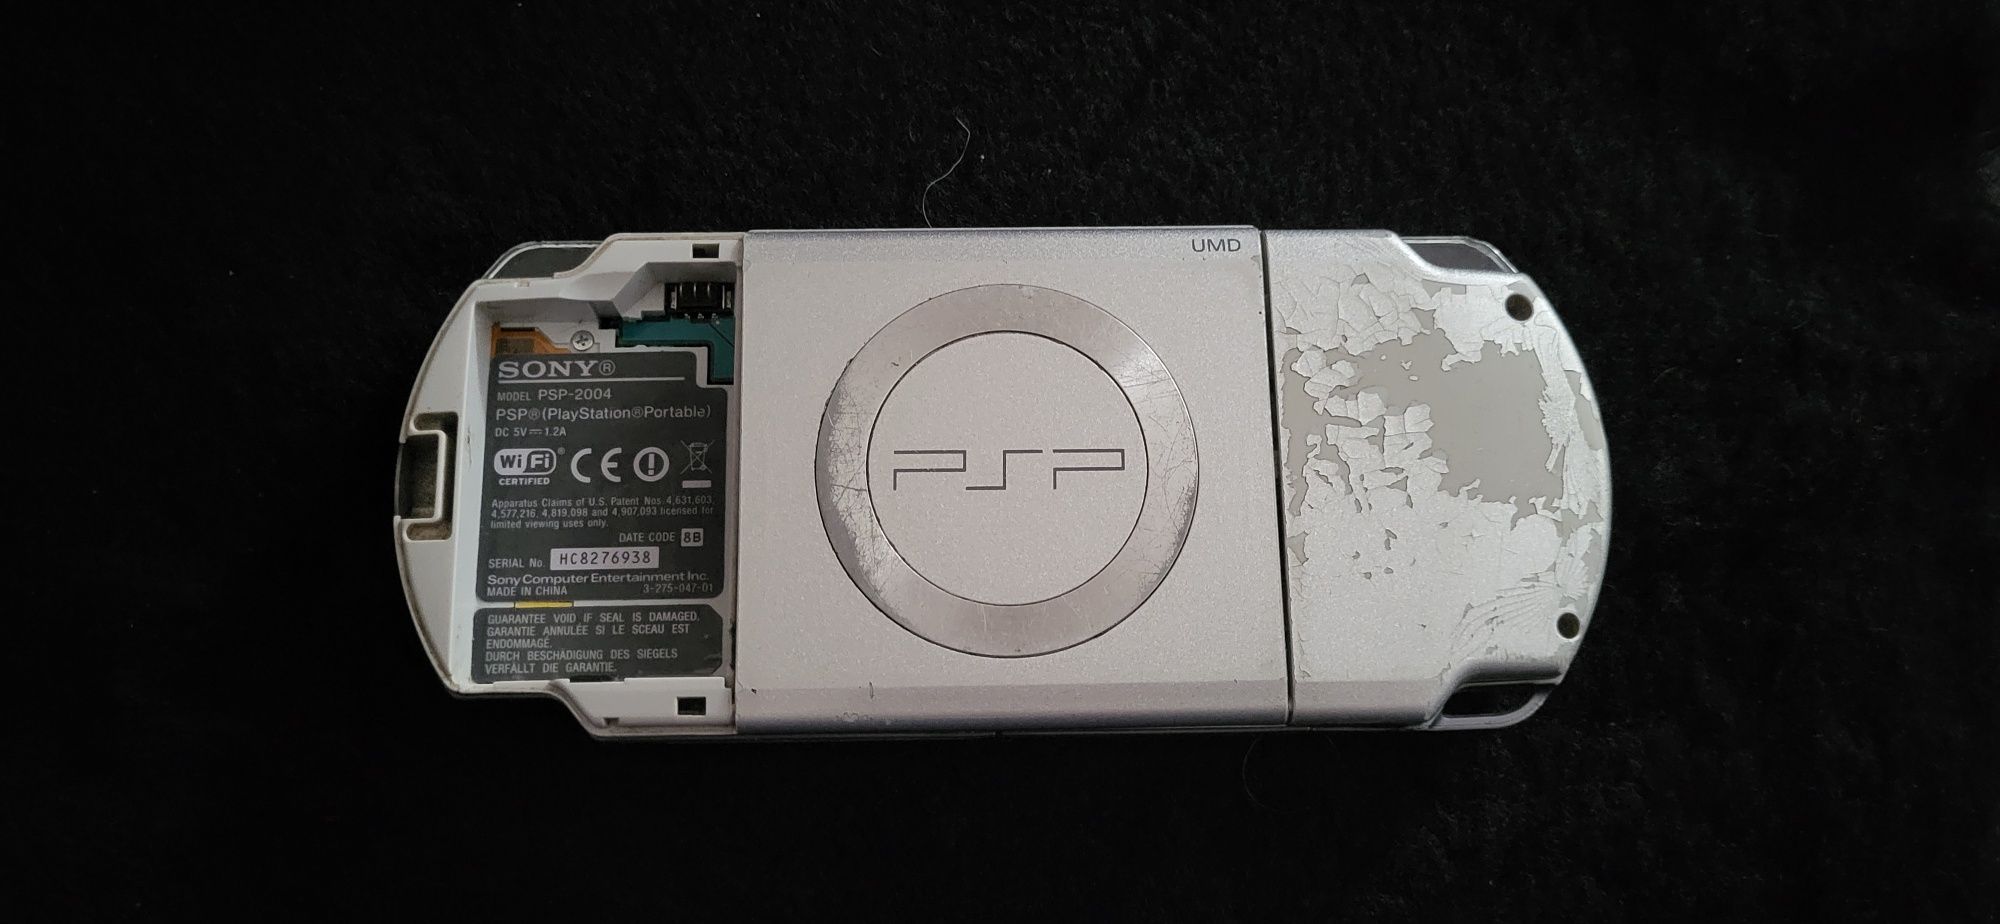 Psp 2004 Gri - PlayStation Portable